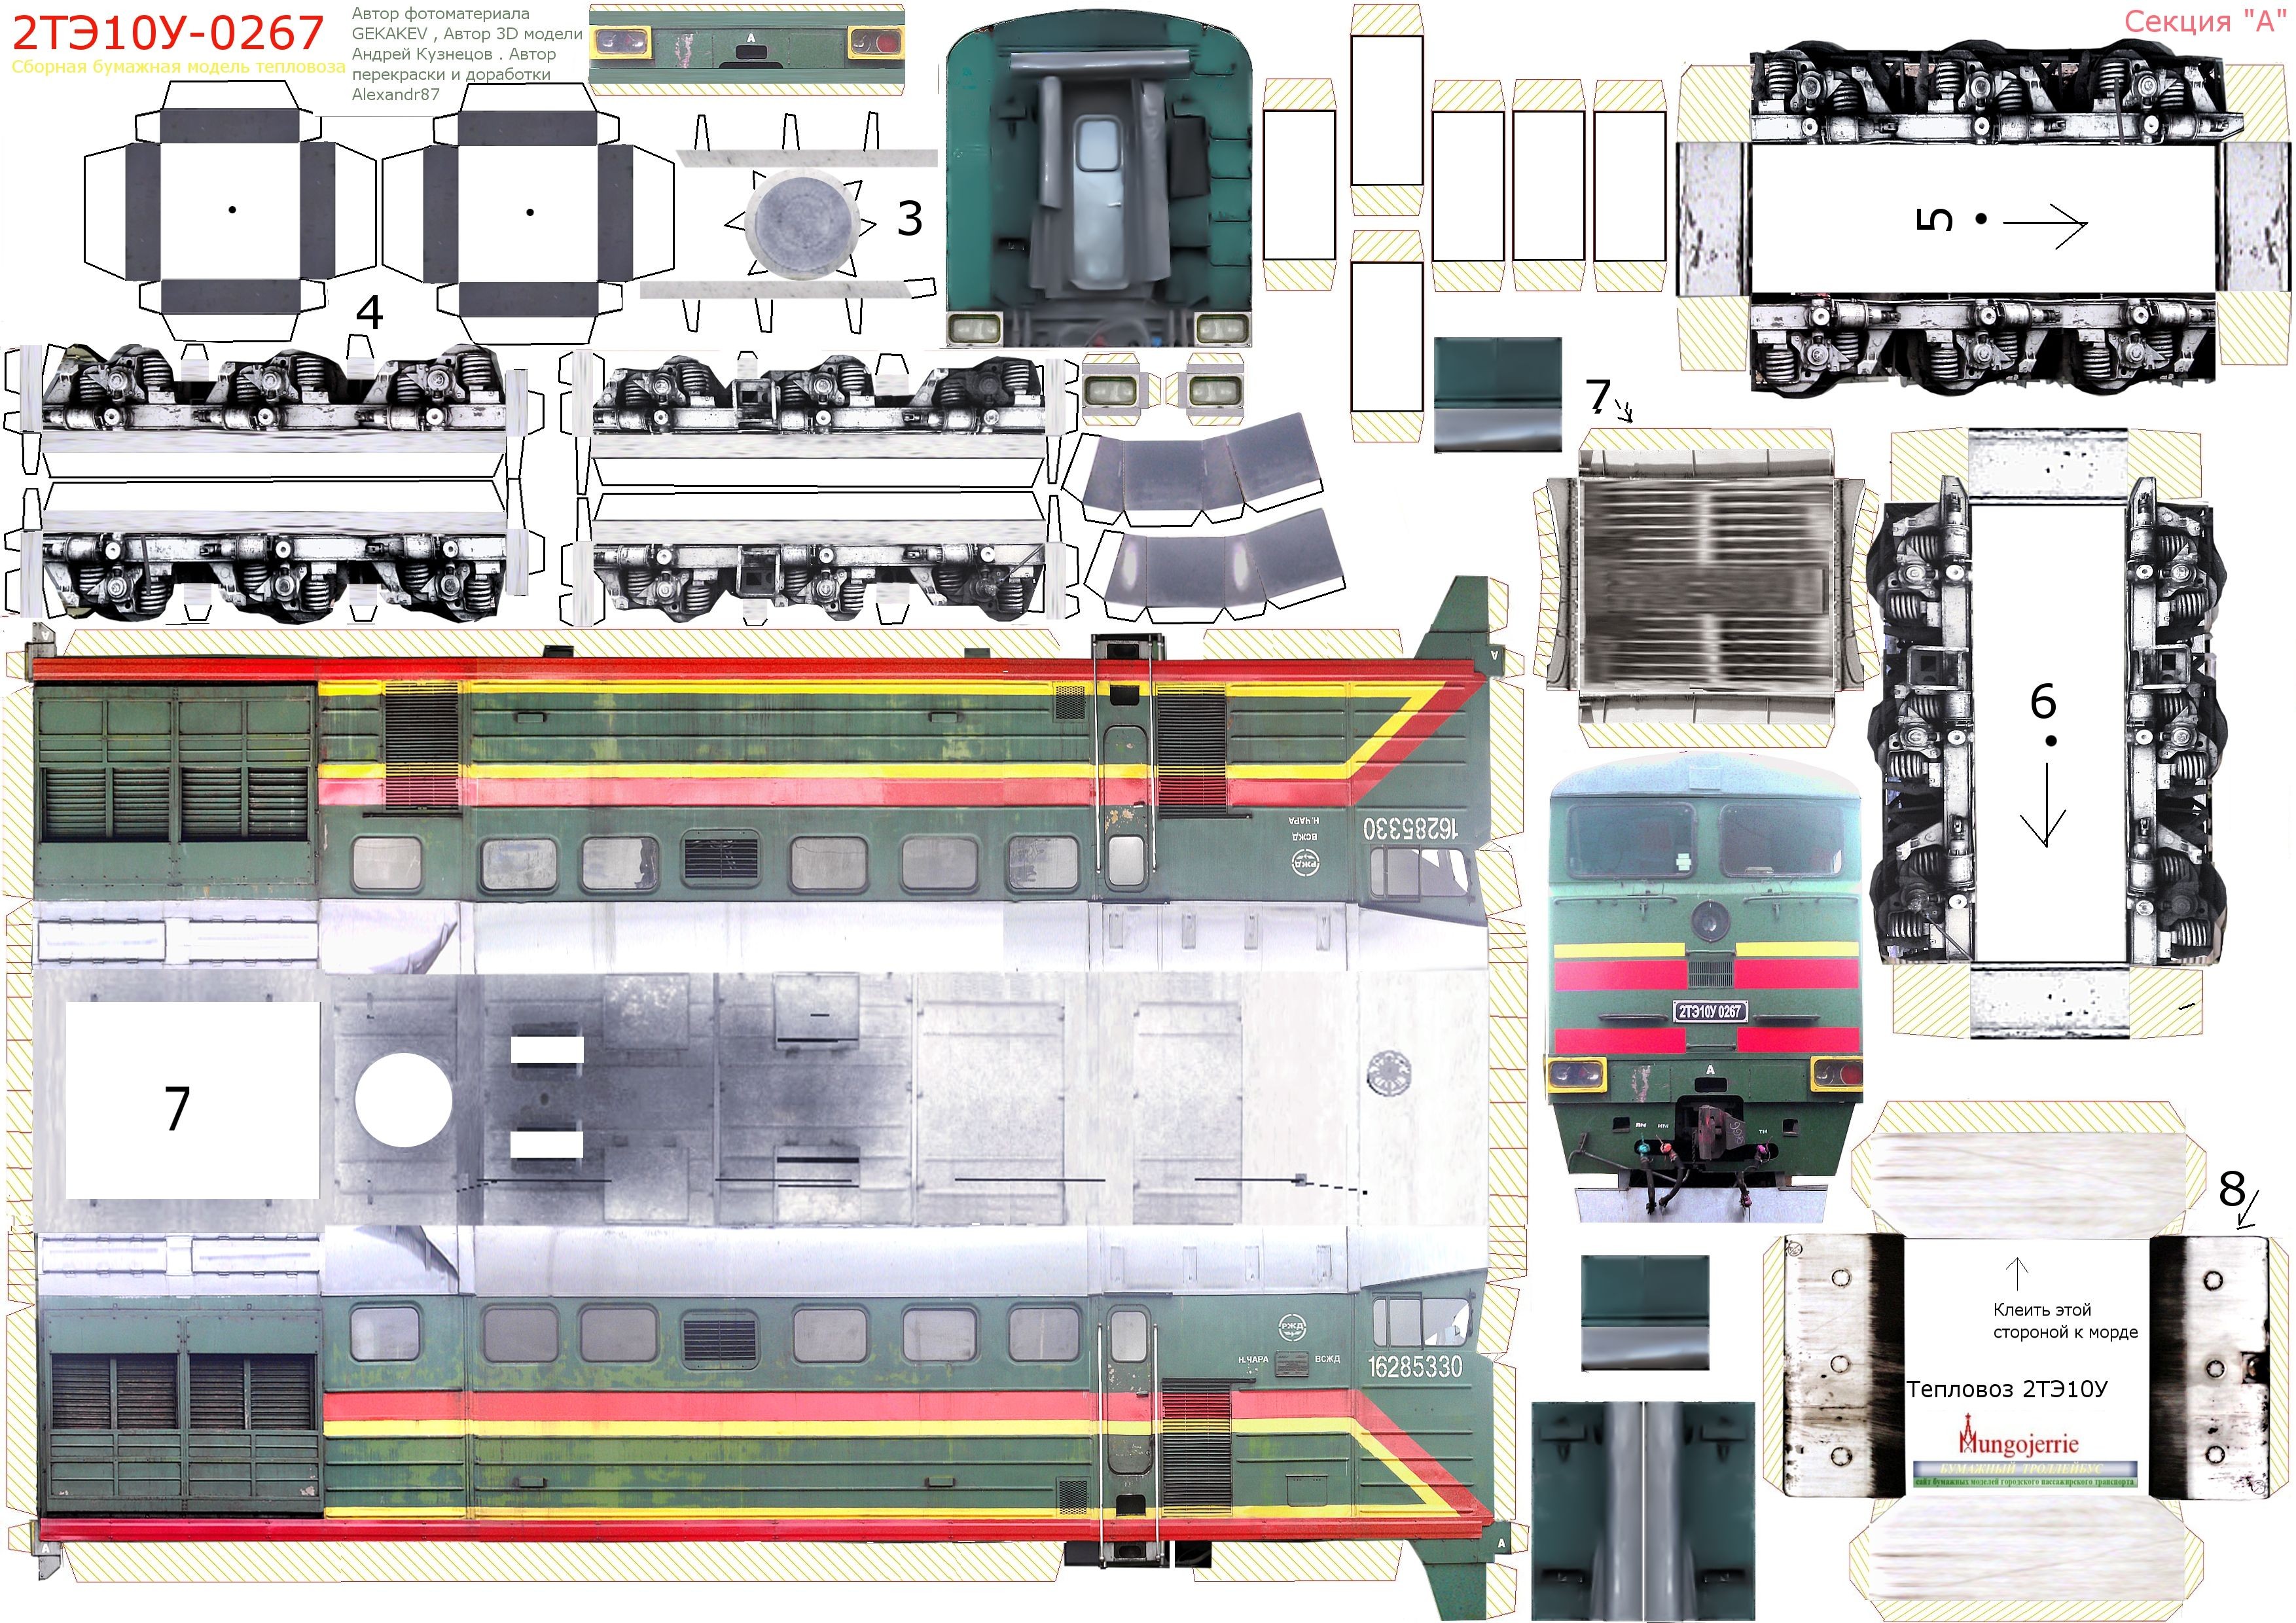 Train Engine Template Printable